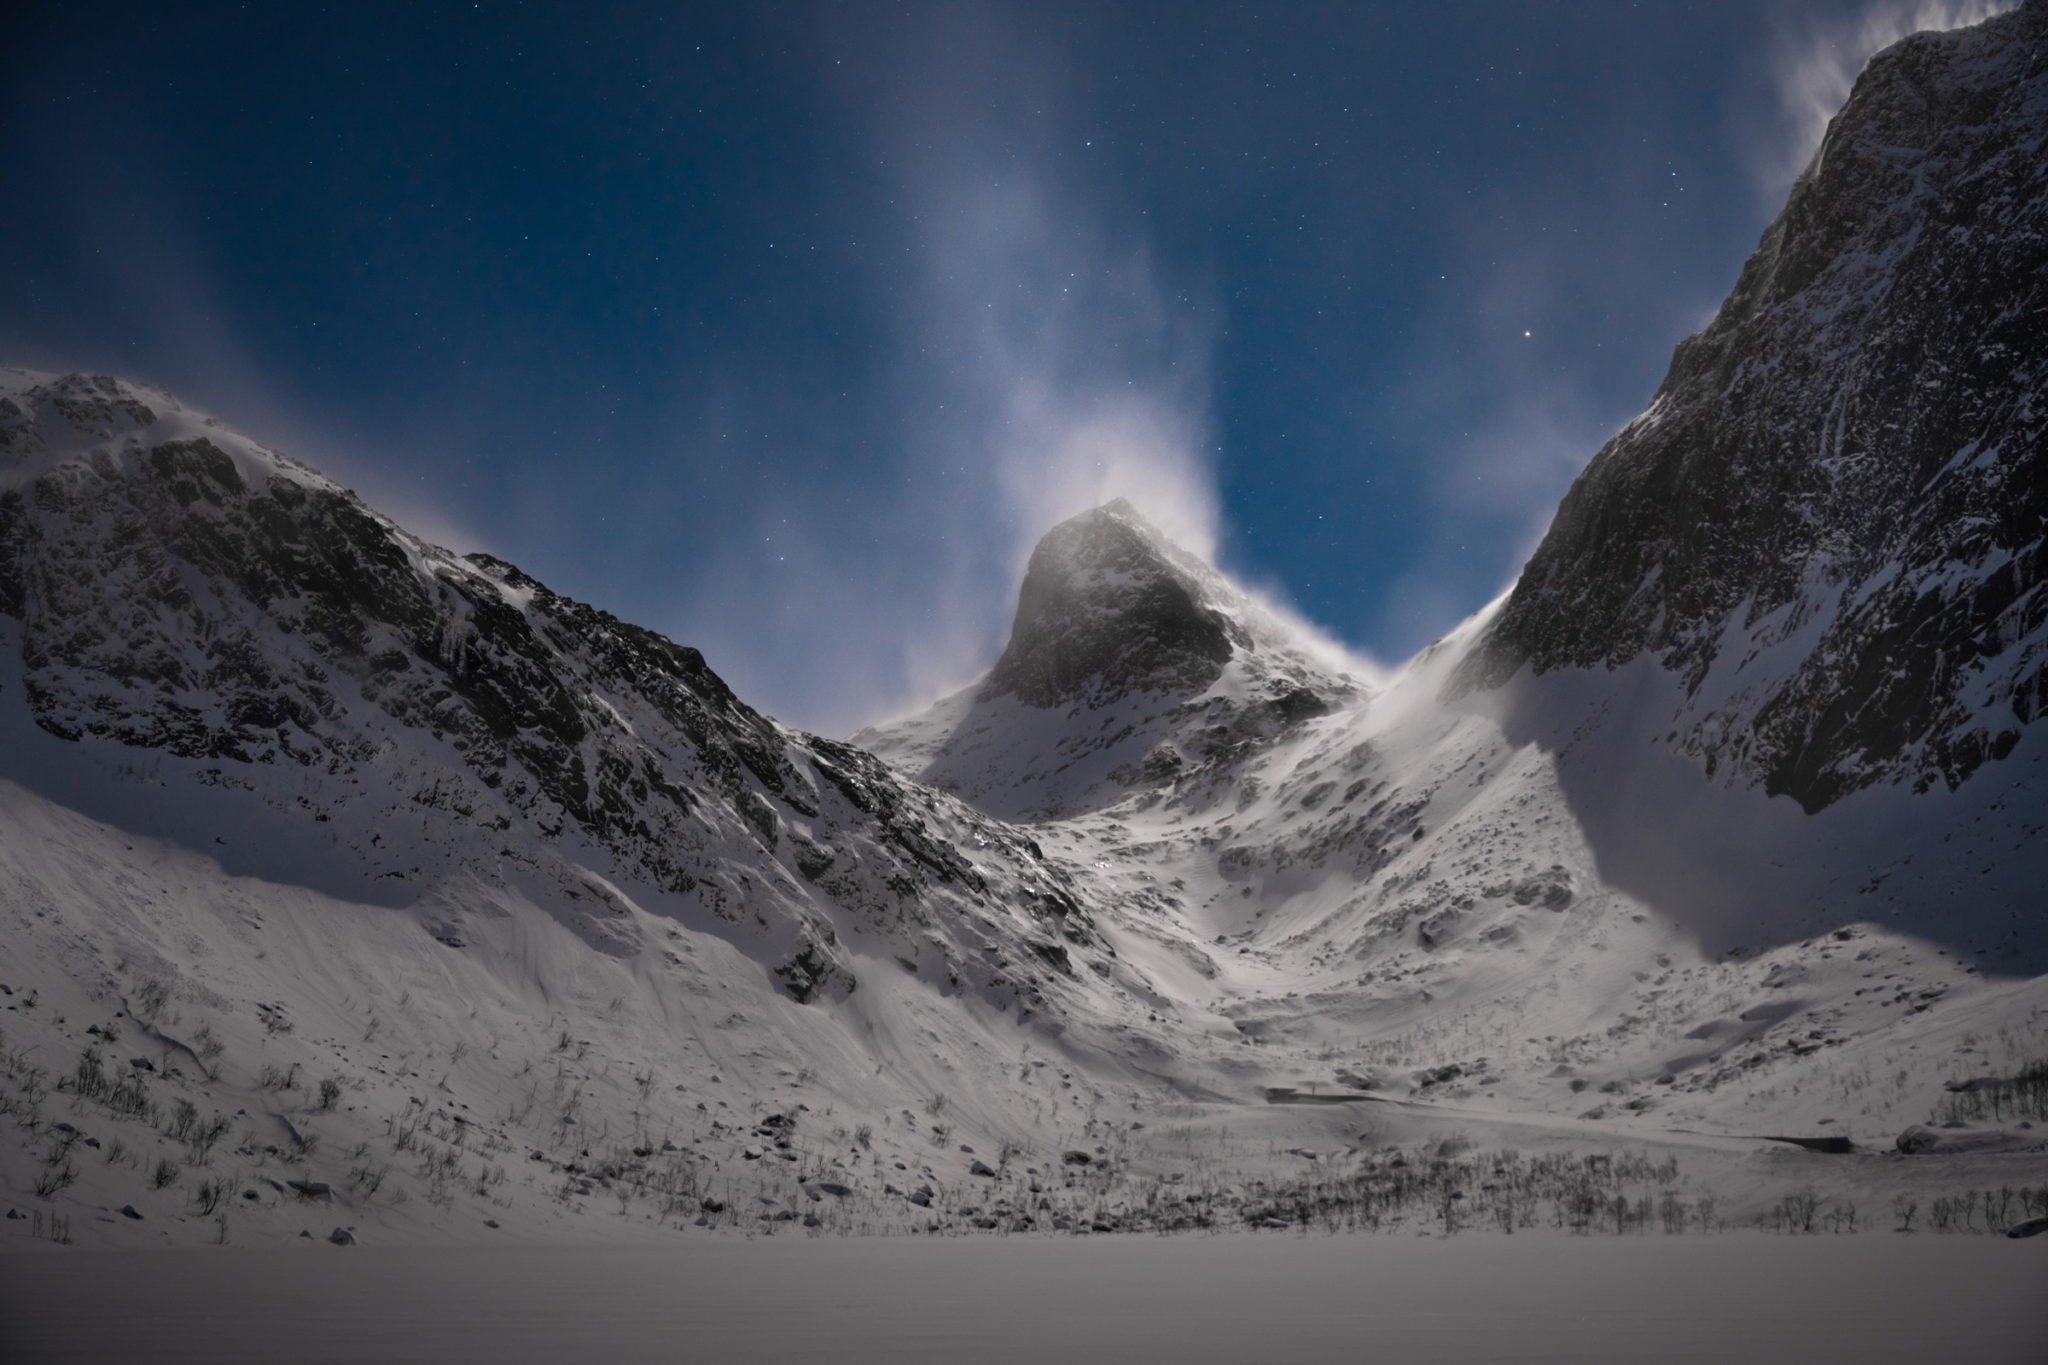 Drifting snow around the Senja peaks a winter's night © Kristoffer Vangen